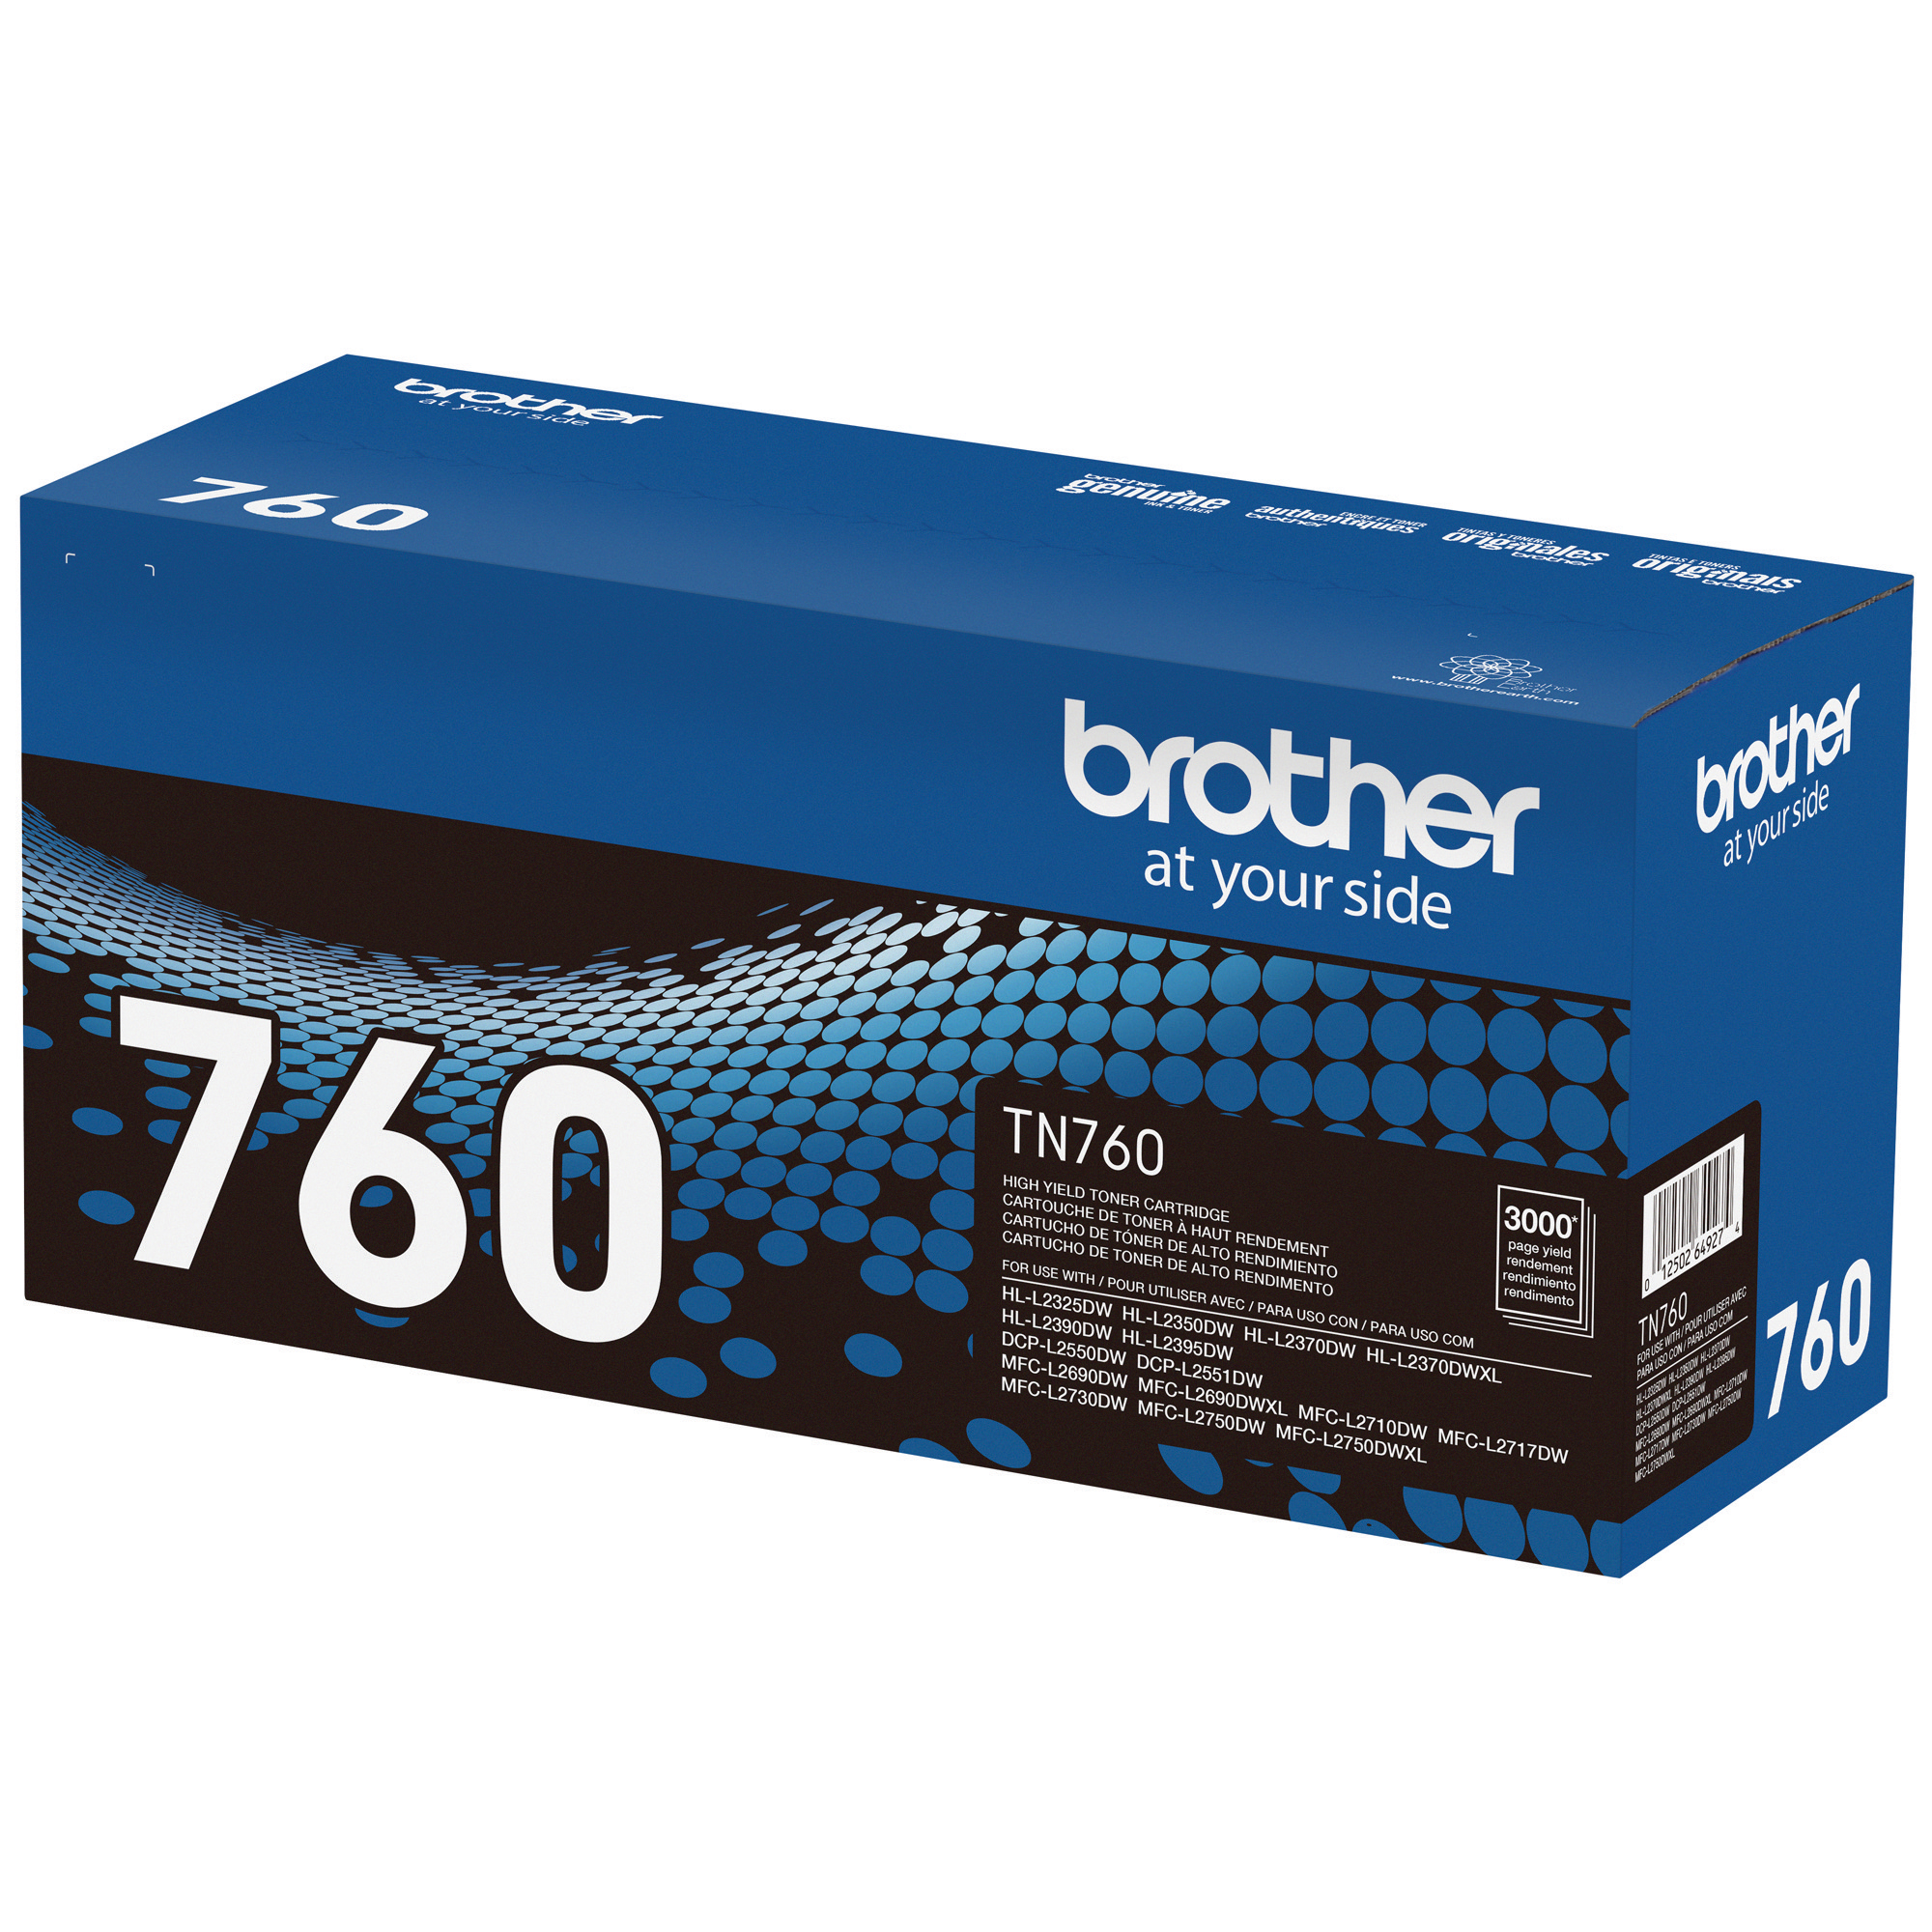 Brother Genuine TN760 High‐Yield Black Printer Toner Cartridge - image 2 of 6